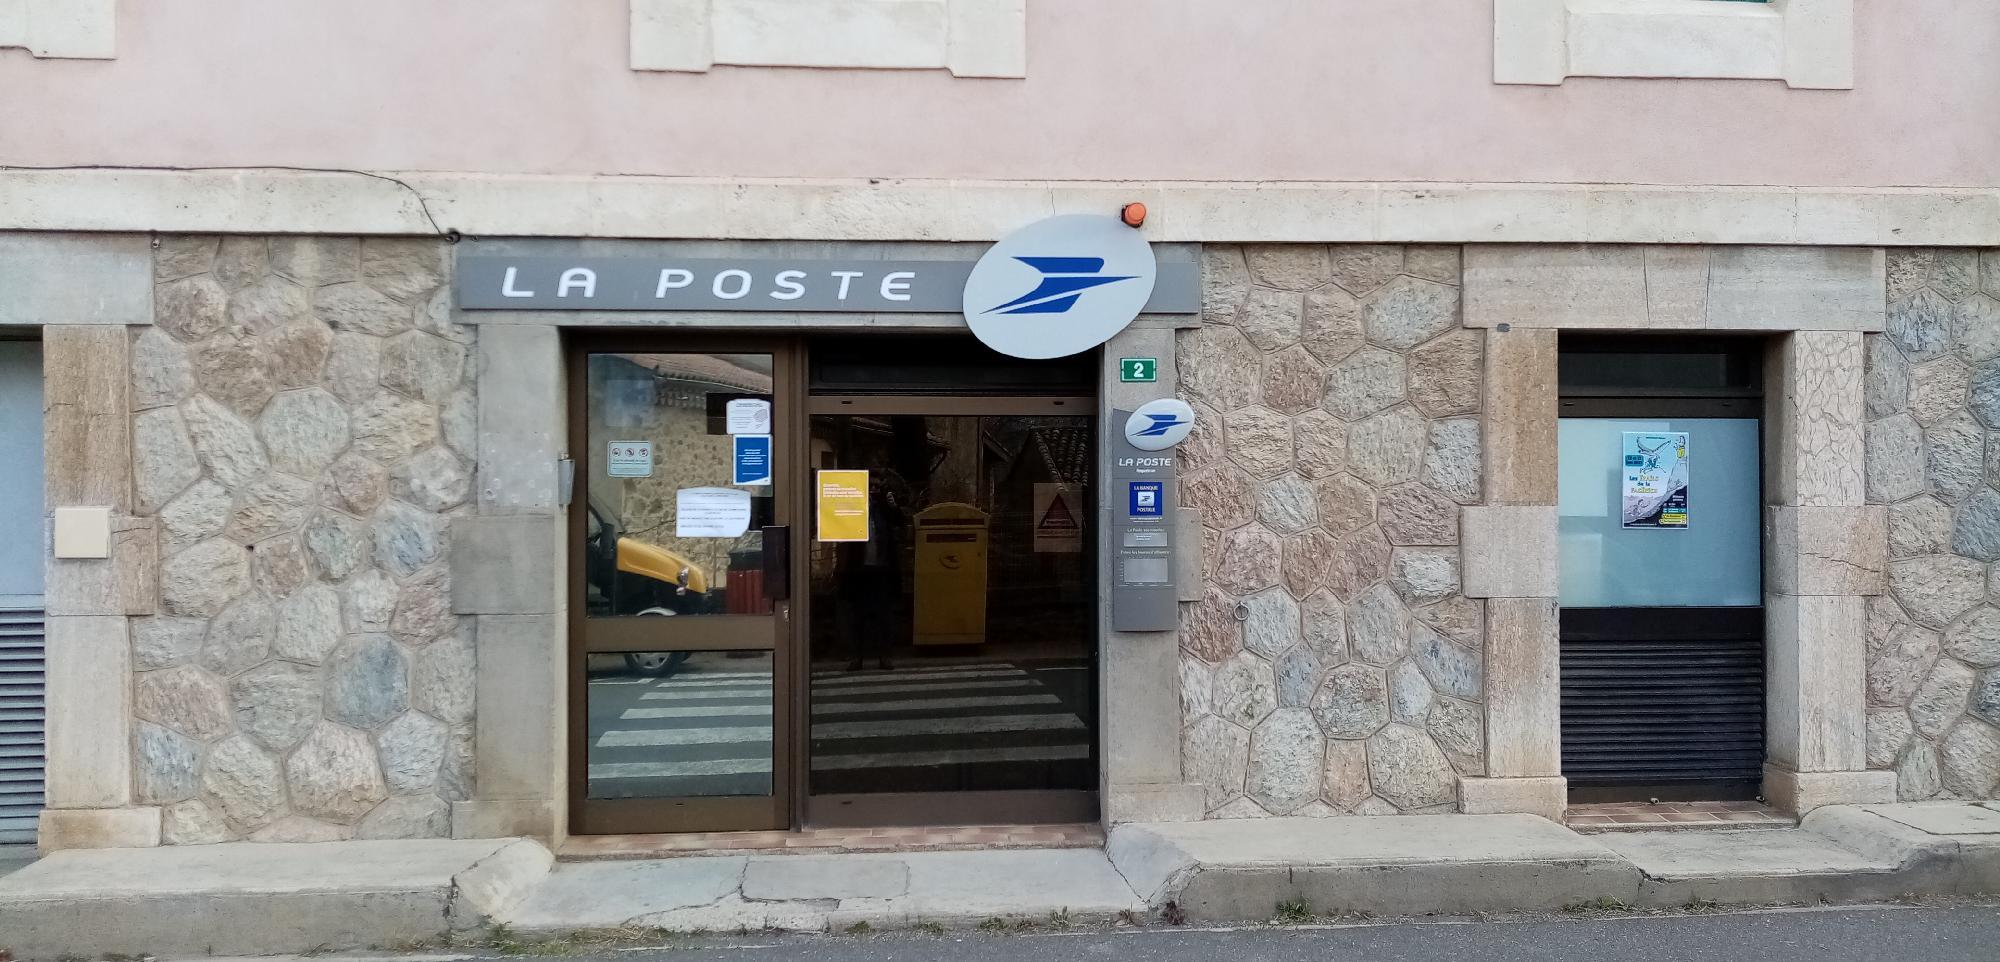 La Poste Roquebrun